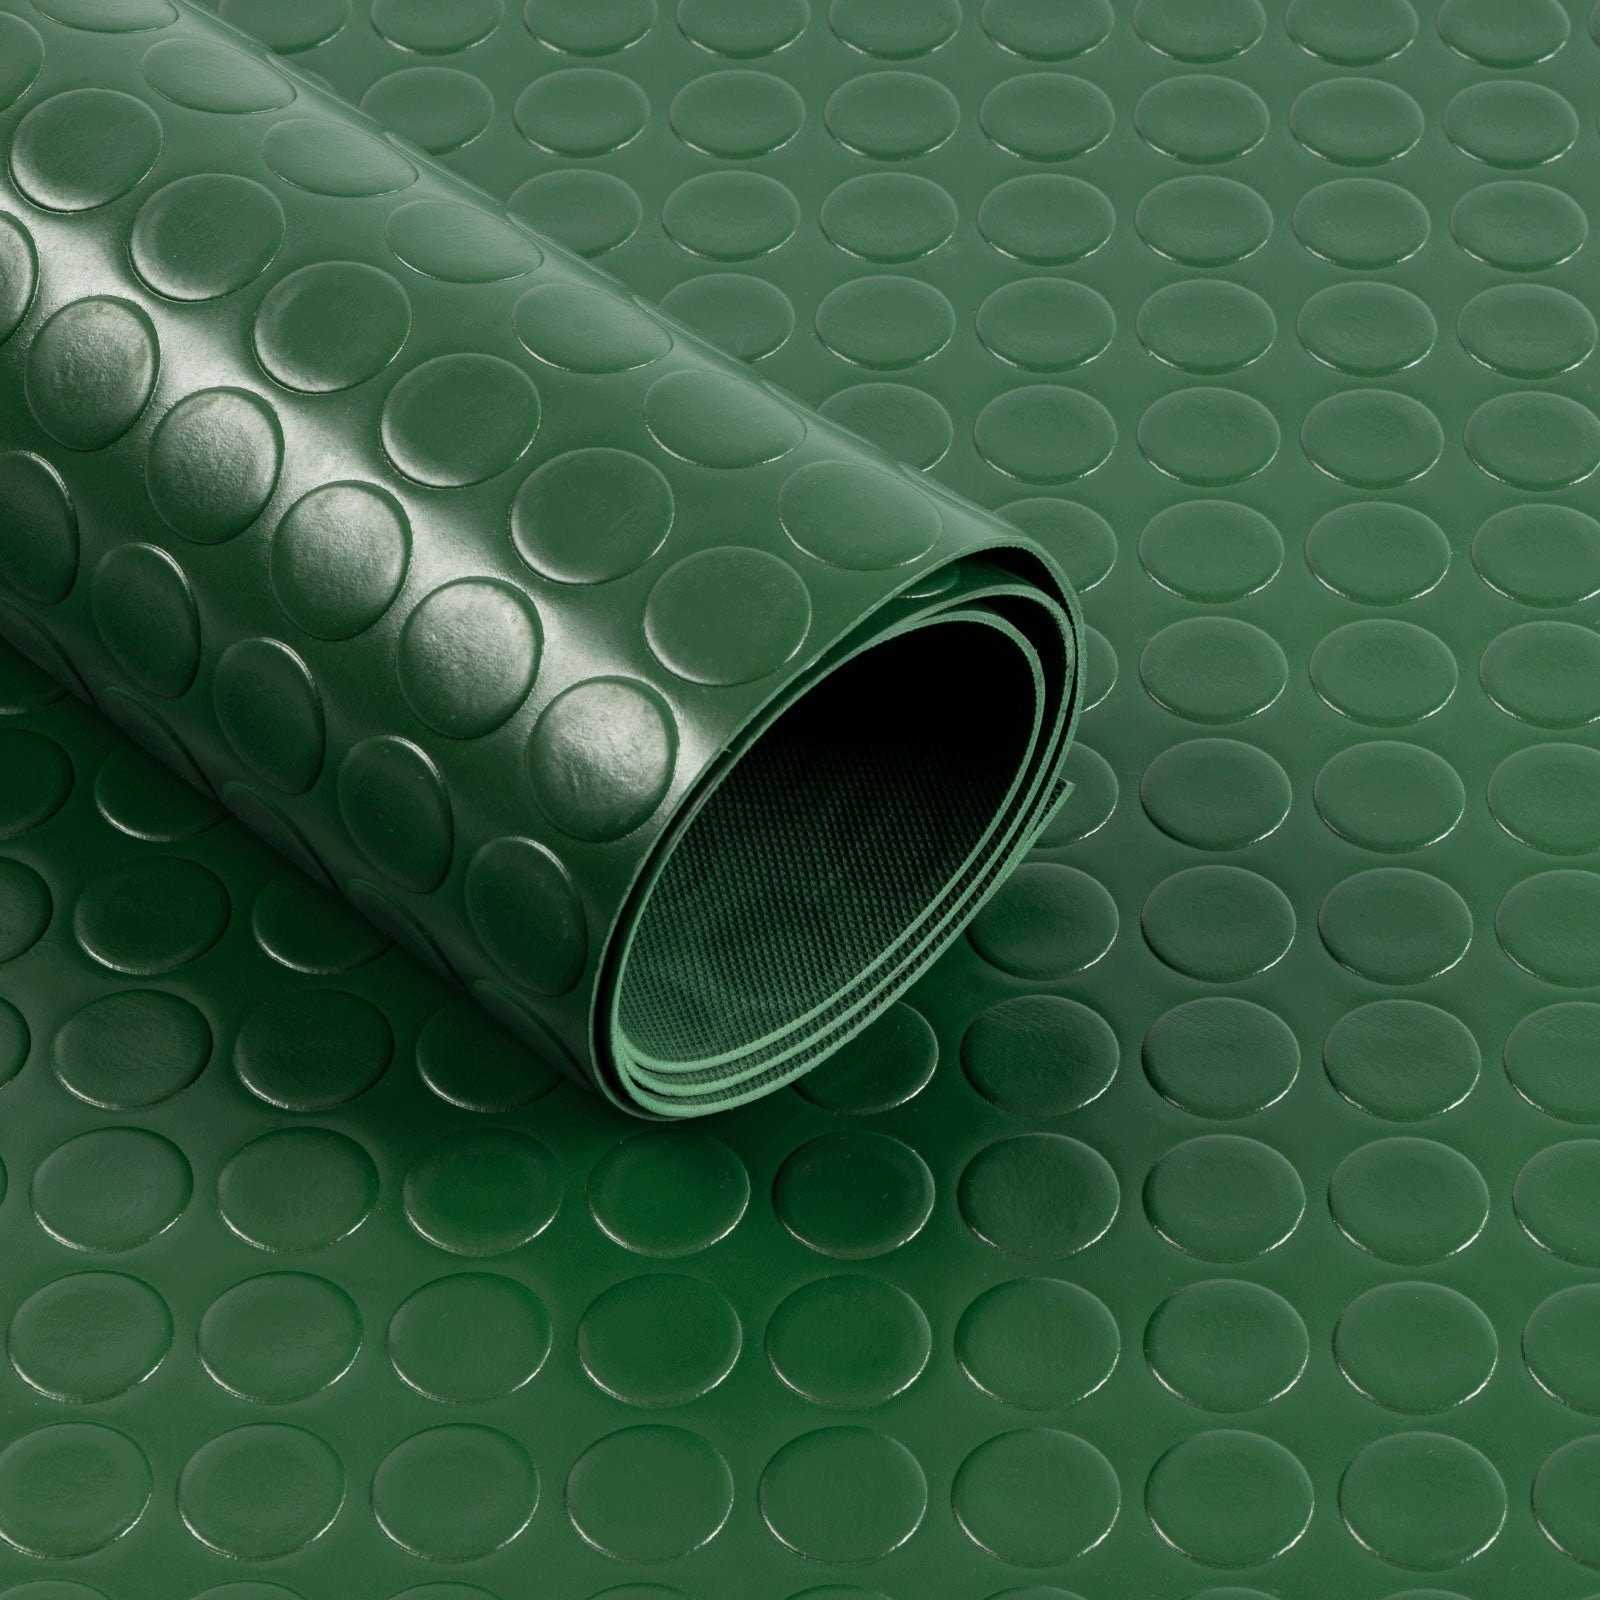 Farben Große PVC-Bodenbelag, Stärke Bodenschutzmatte Noppen, Kubus viele 2mm, Grün